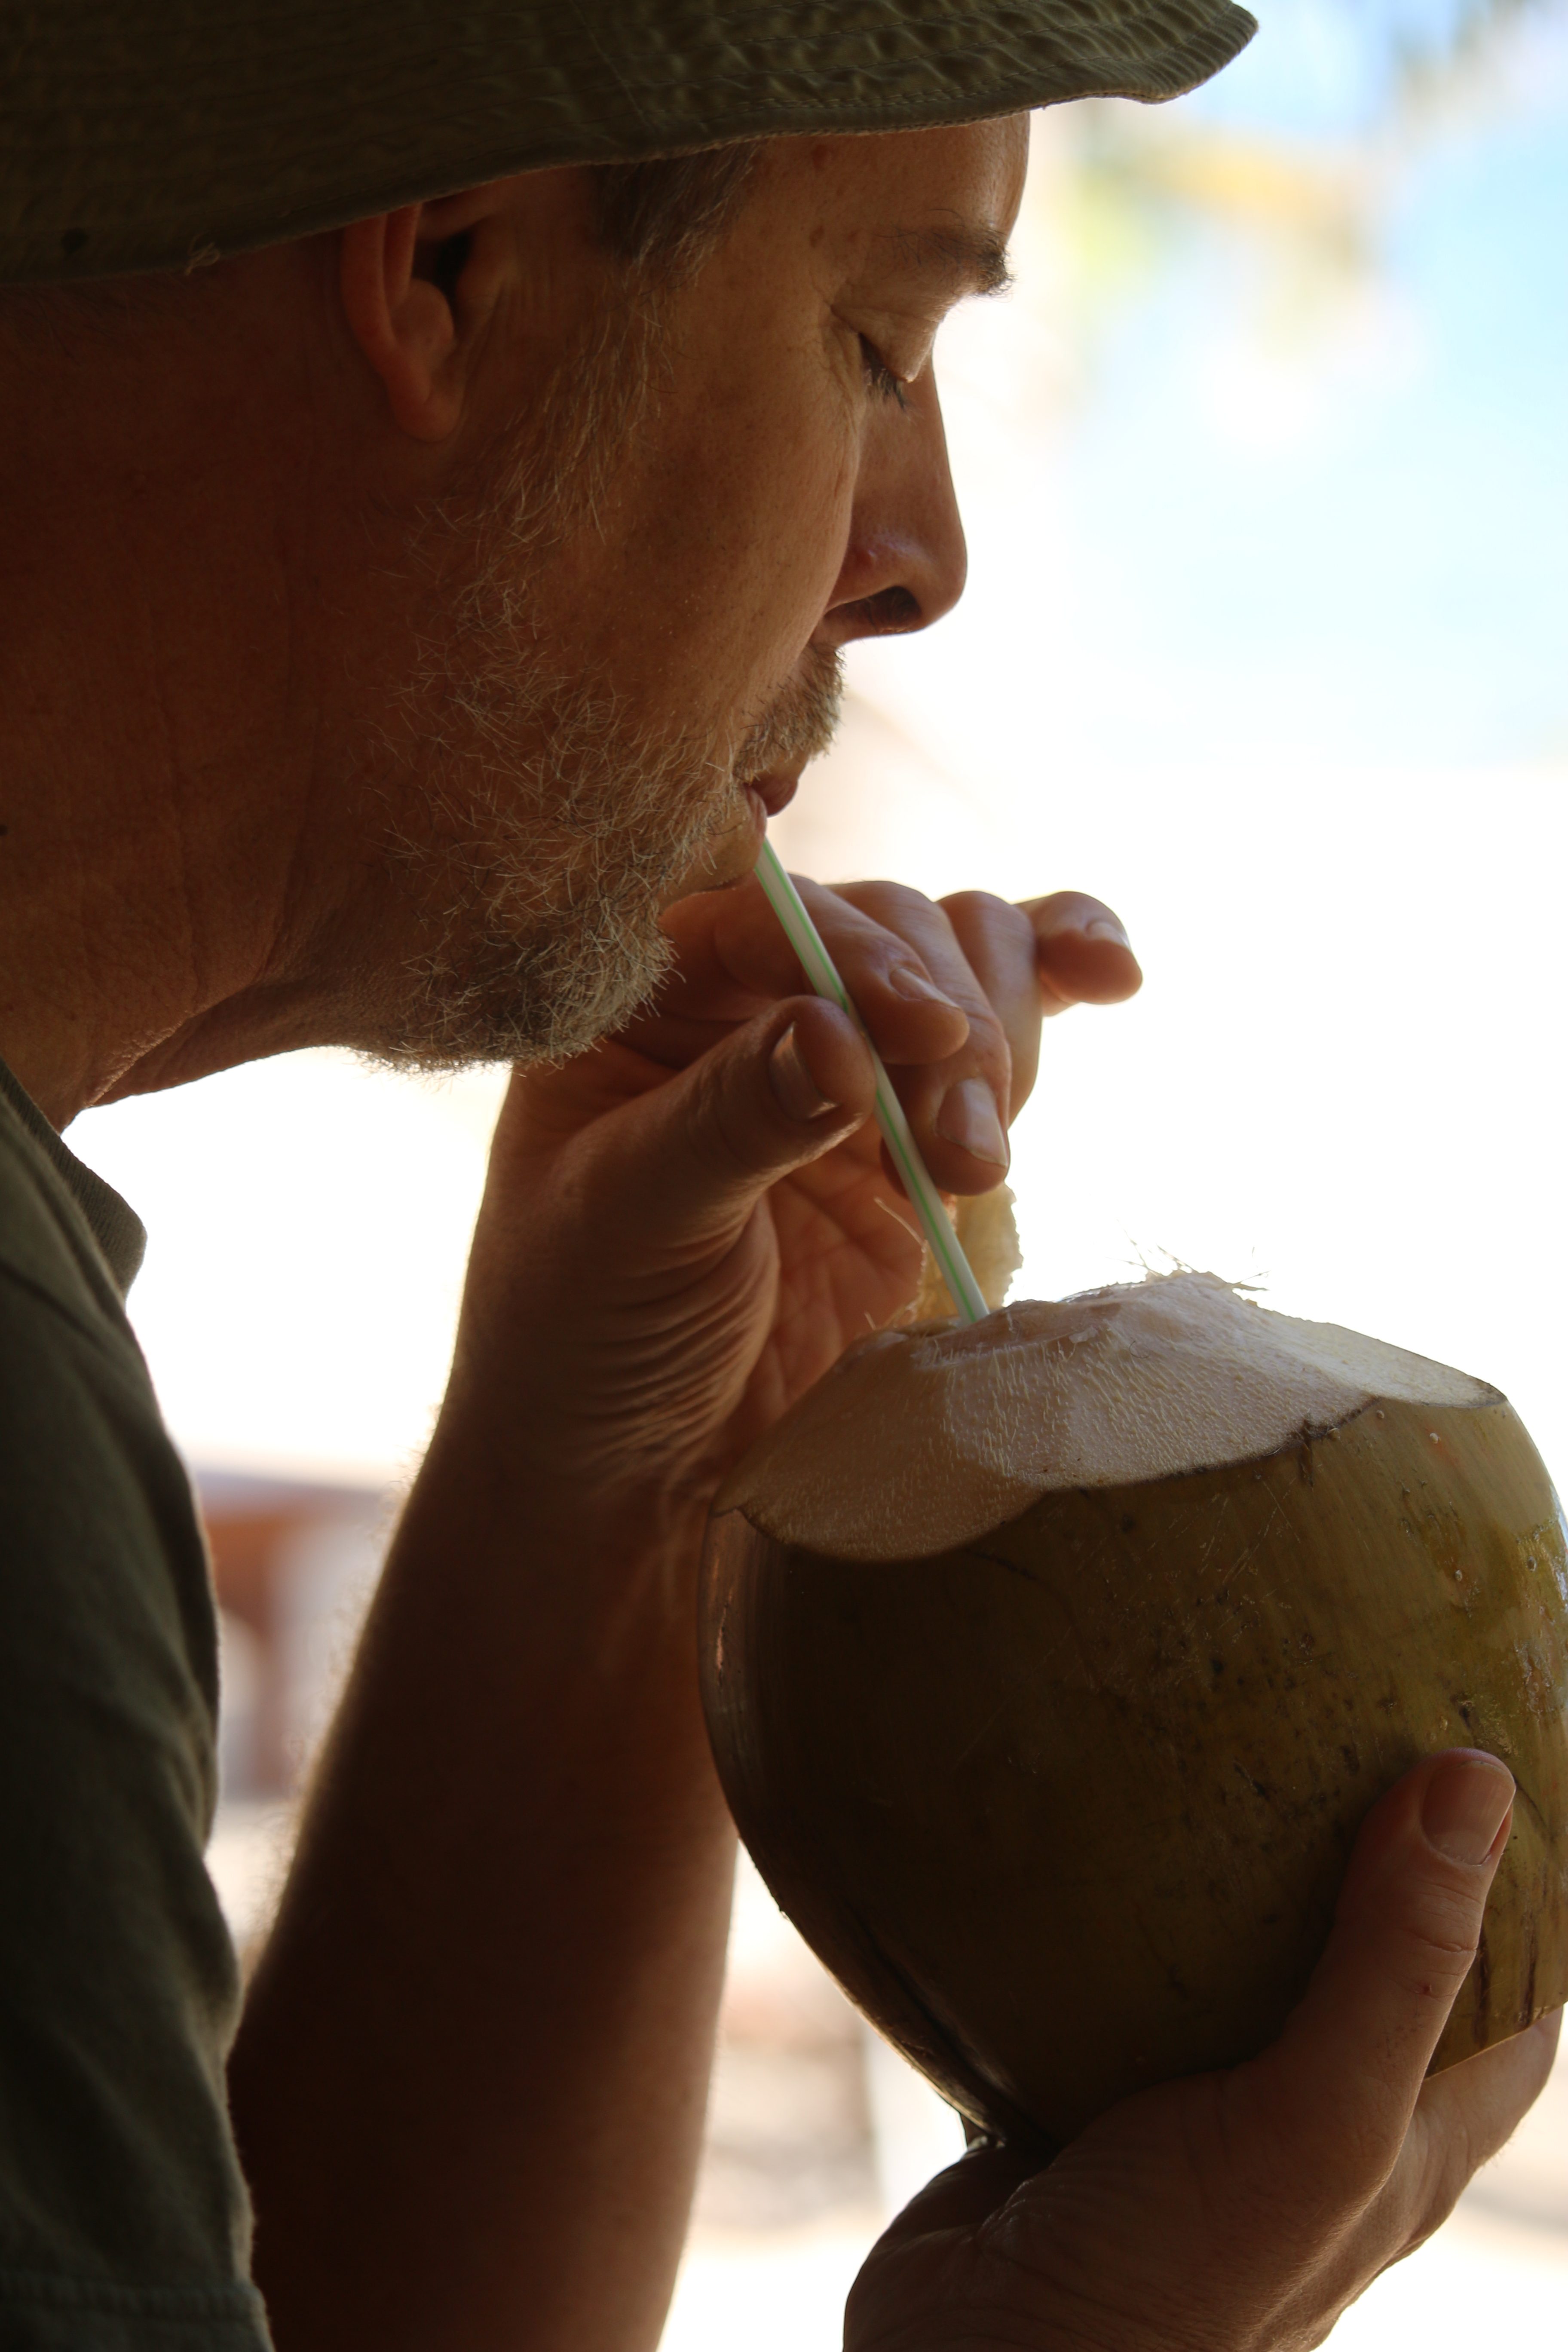 Andy, enjoying some rum-enhanced coconut water